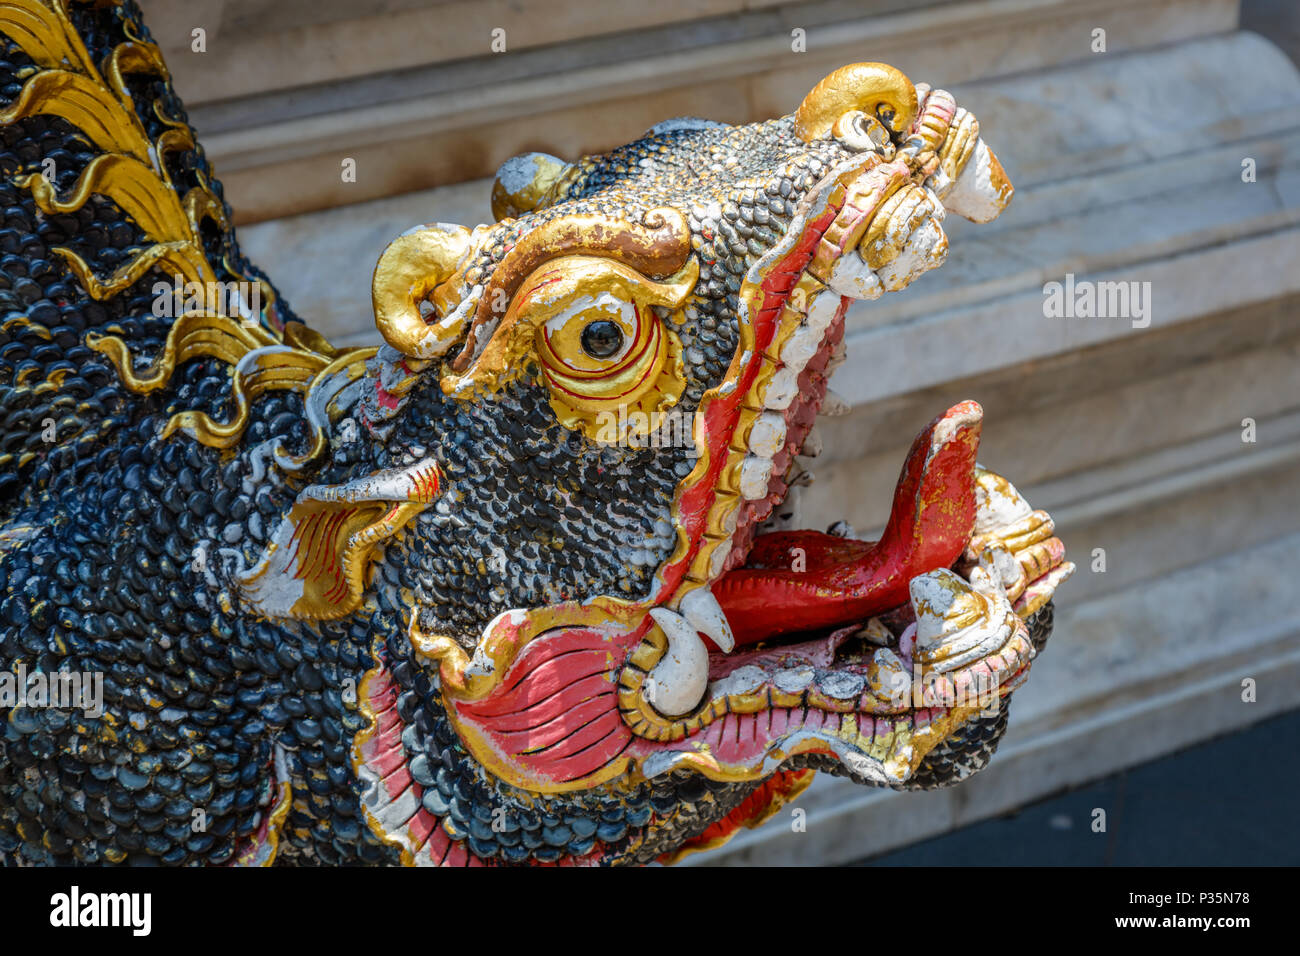 Statue of Mom, a mythological animal at Wat Prathat Doi Suthep, Chiang Mai province, Thailand Stock Photo